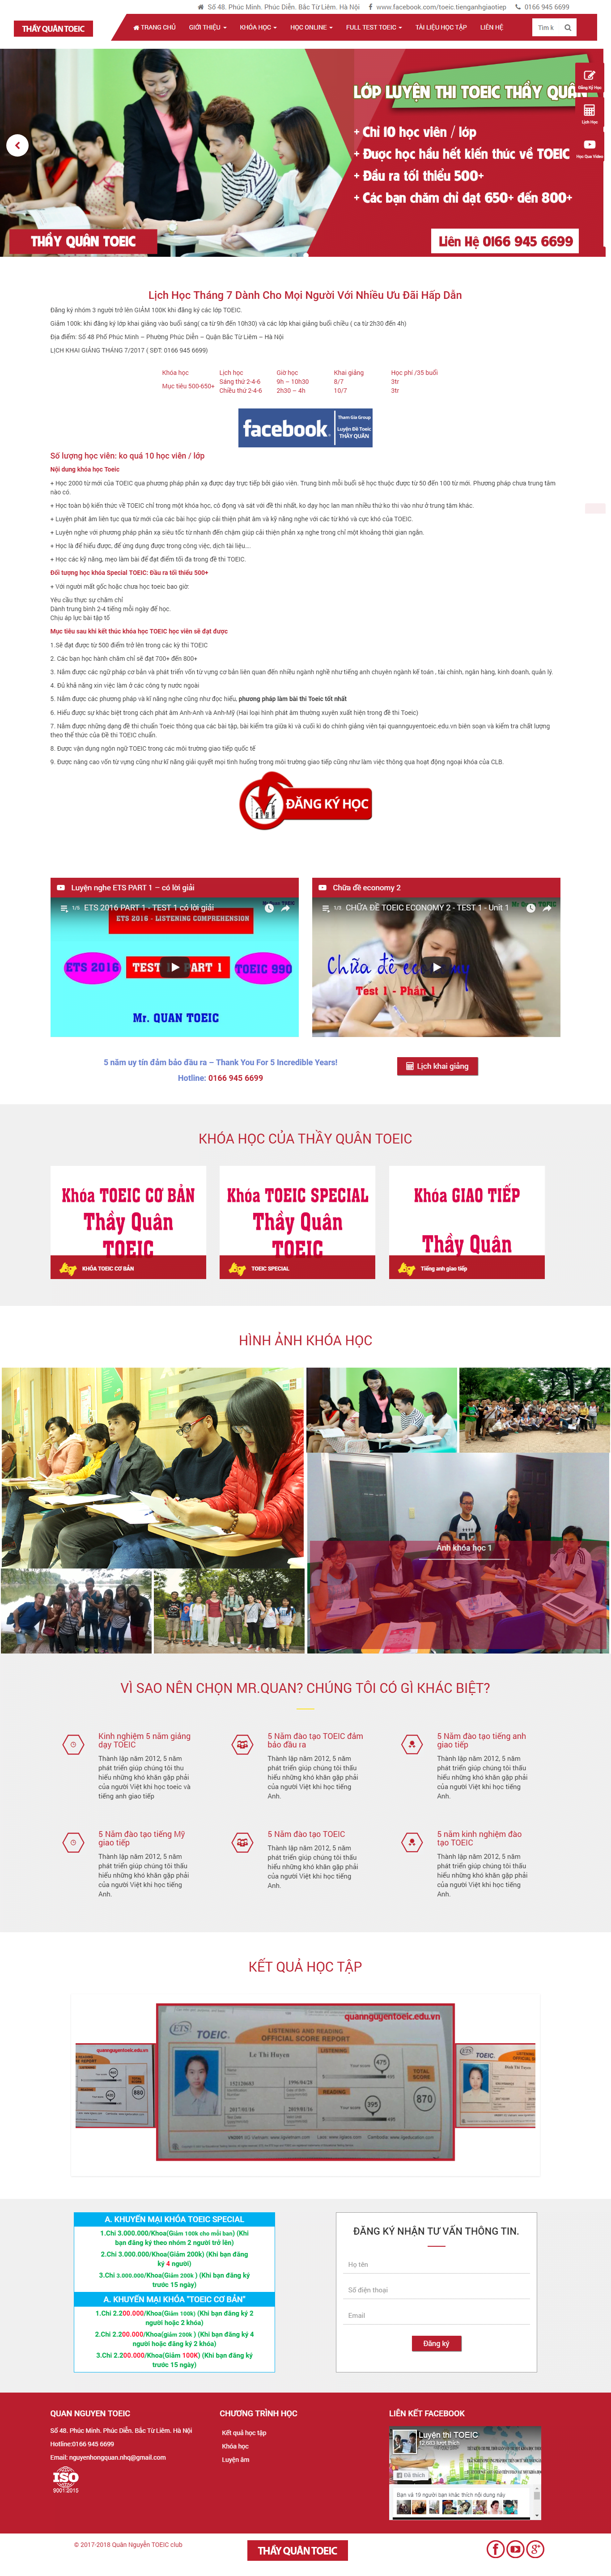 Website trung tâm dạy tiếng anh